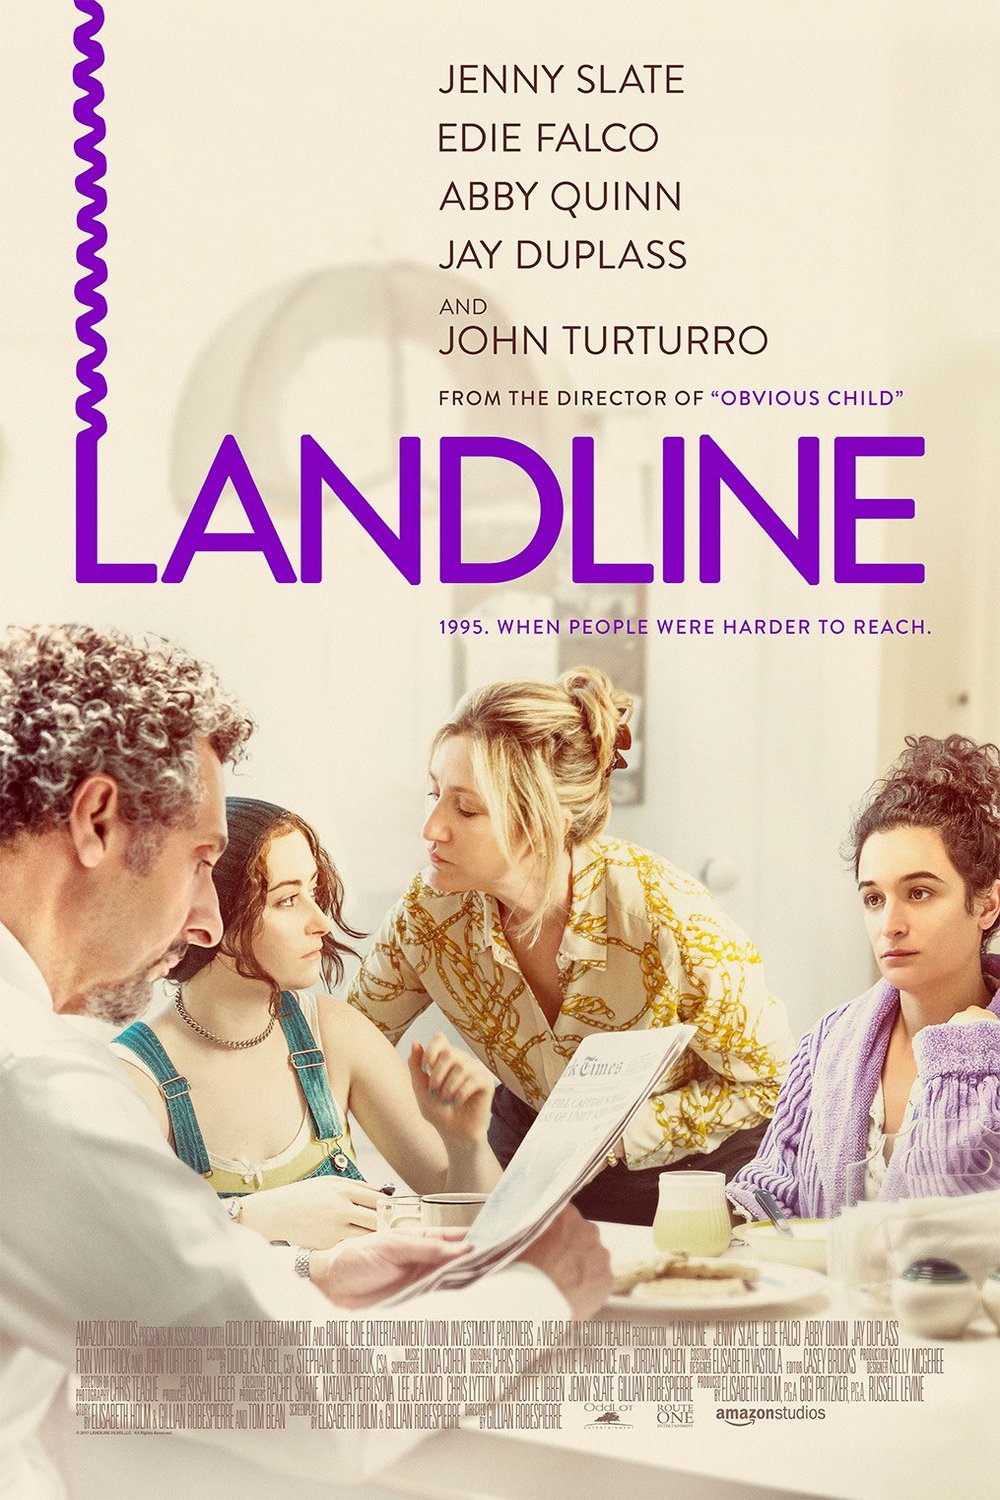 Poster of the movie Landline